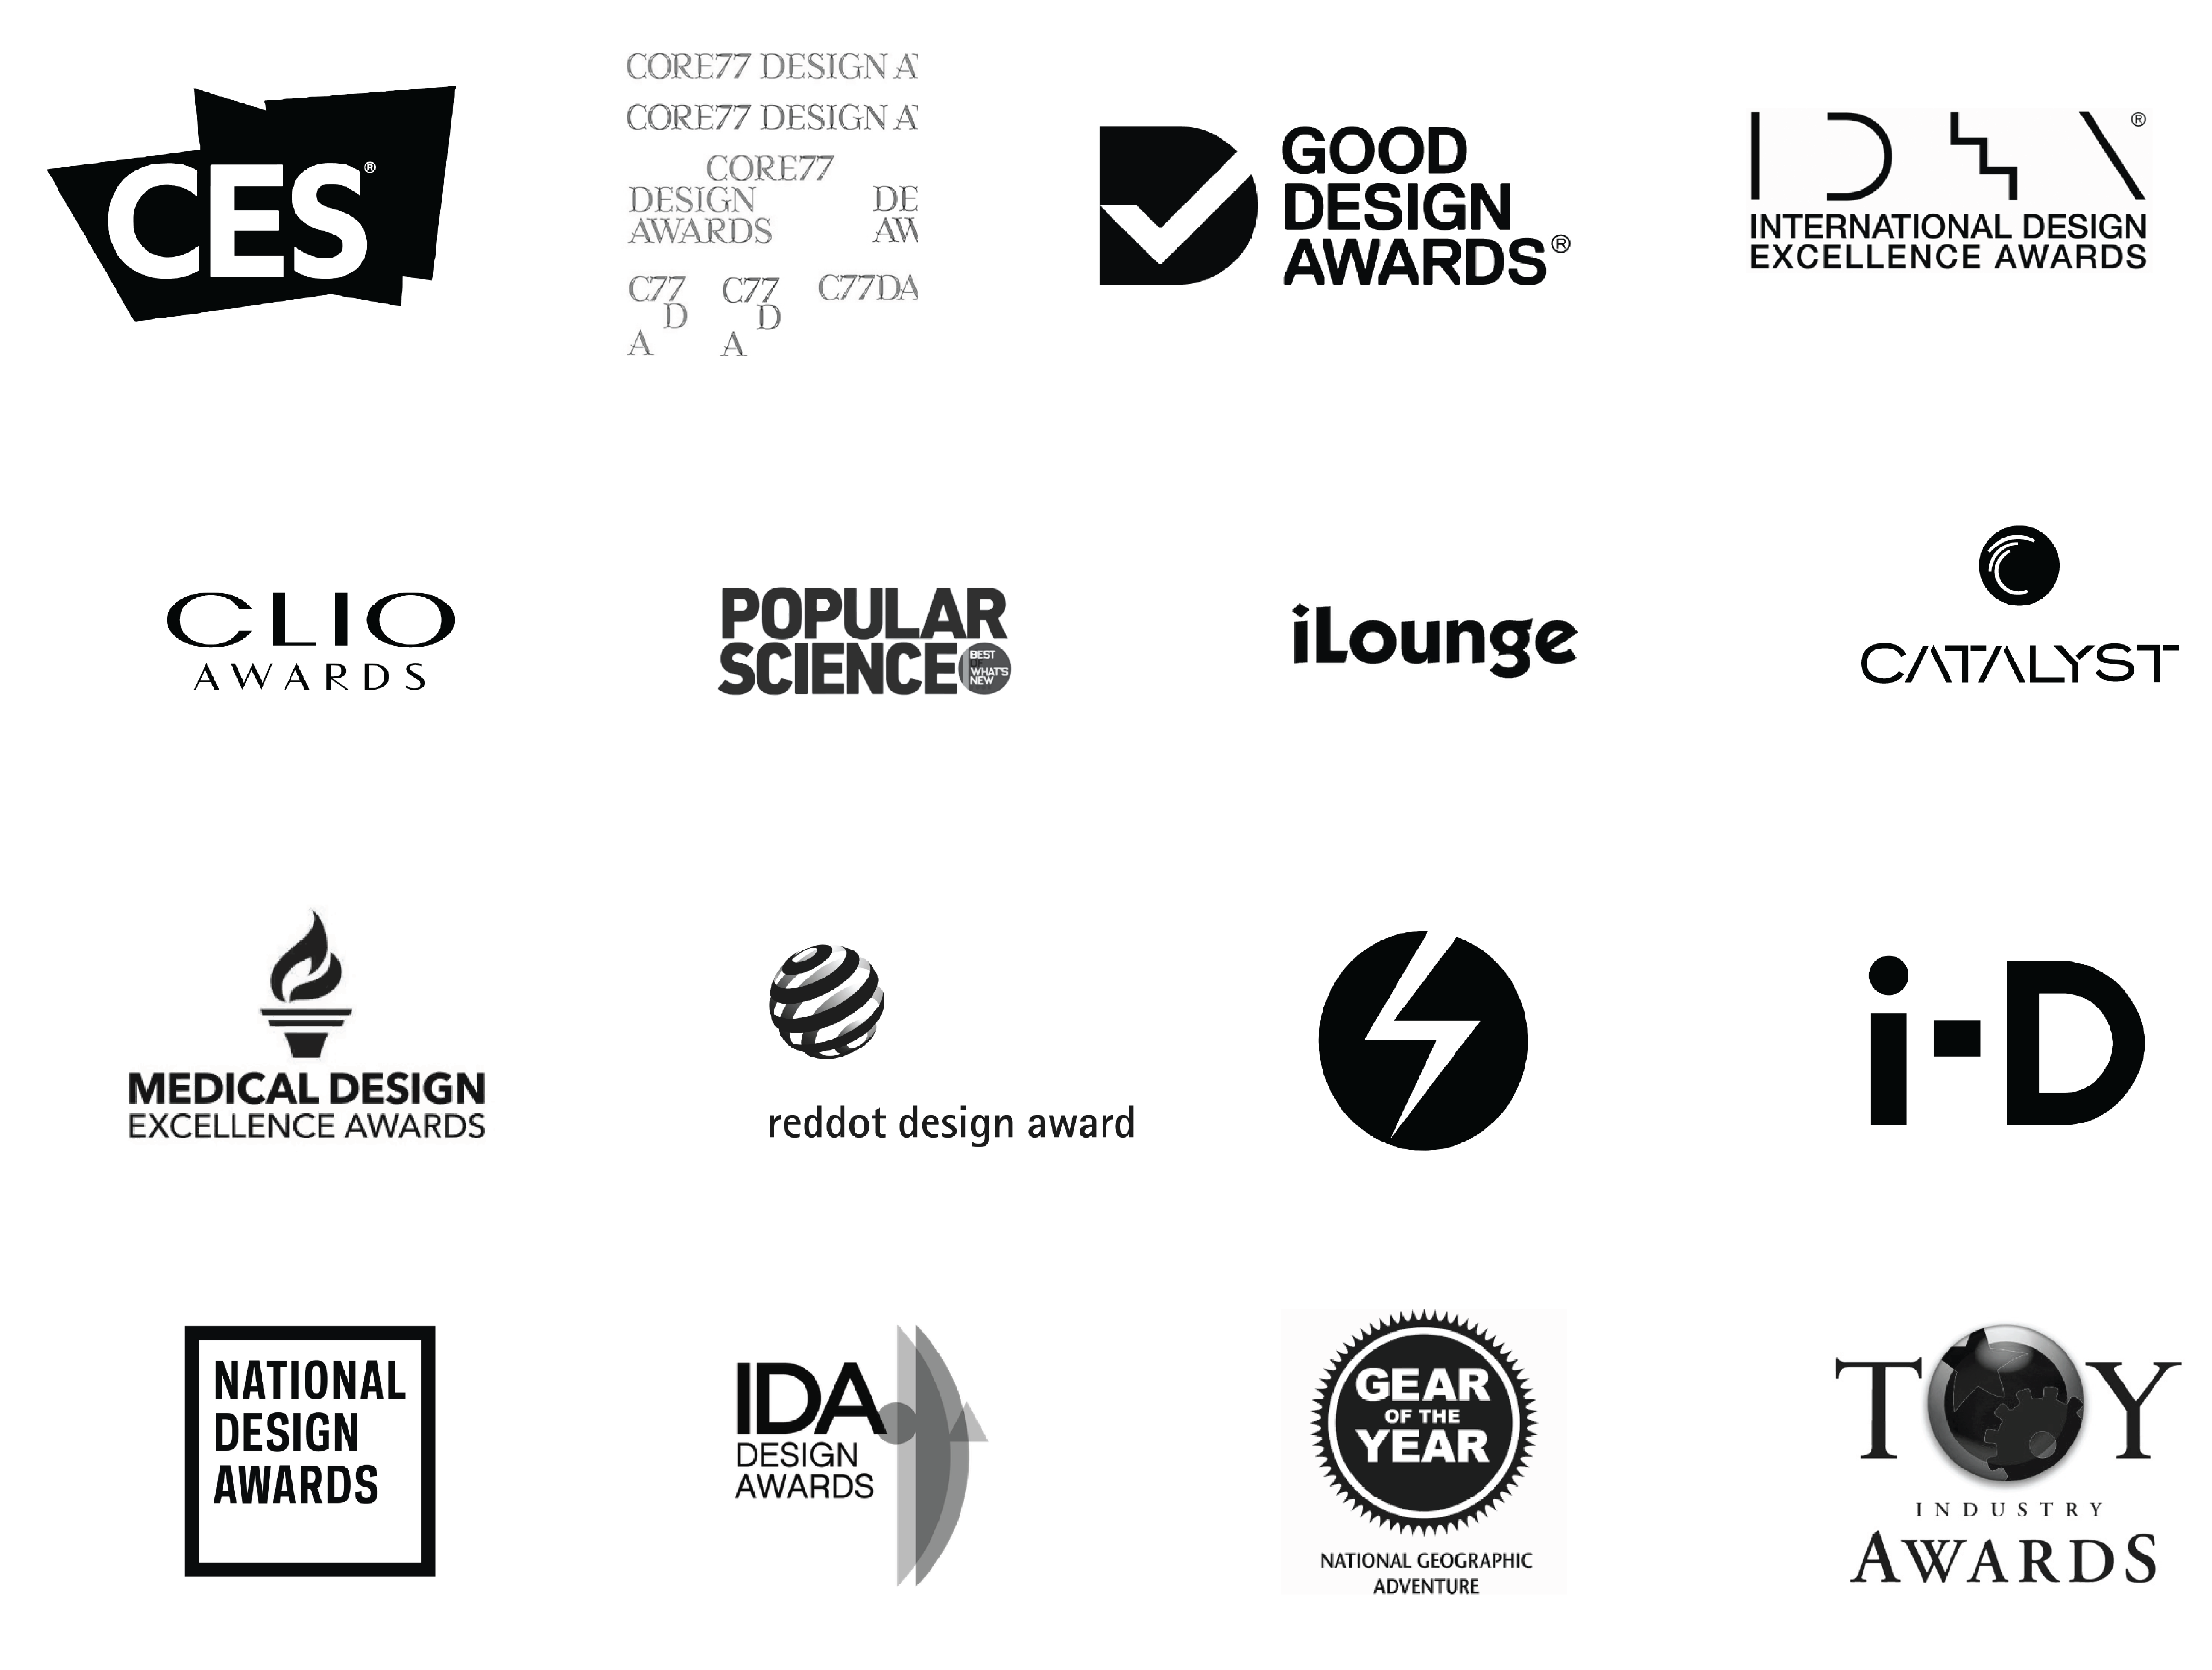 RKS产品设计公司的设计和Innovation奖项名单